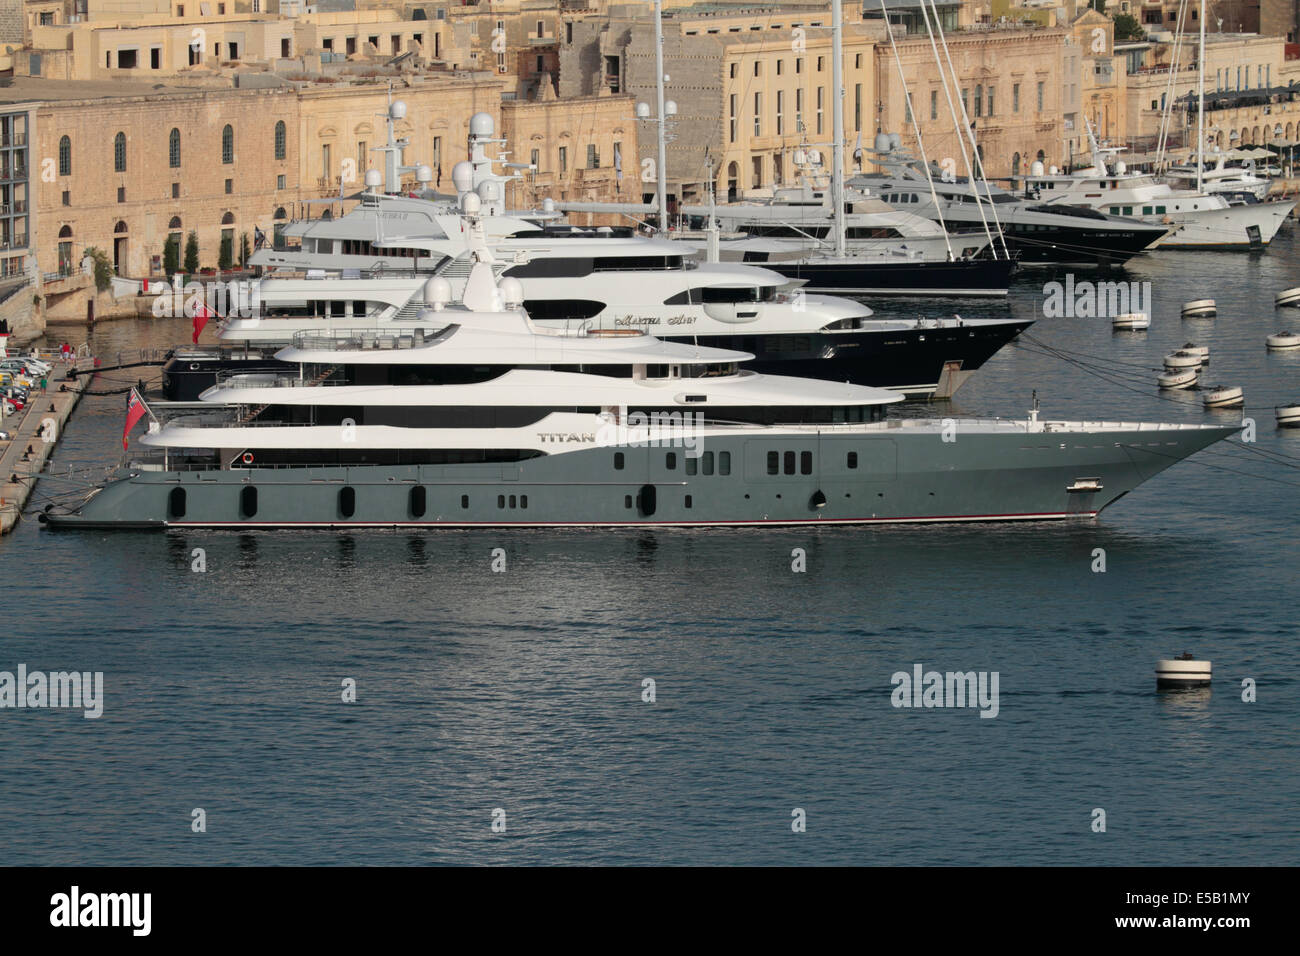 The 78-metre Abeking and Rasmussen luxury superyacht Titan in Malta's Grand Harbour Stock Photo